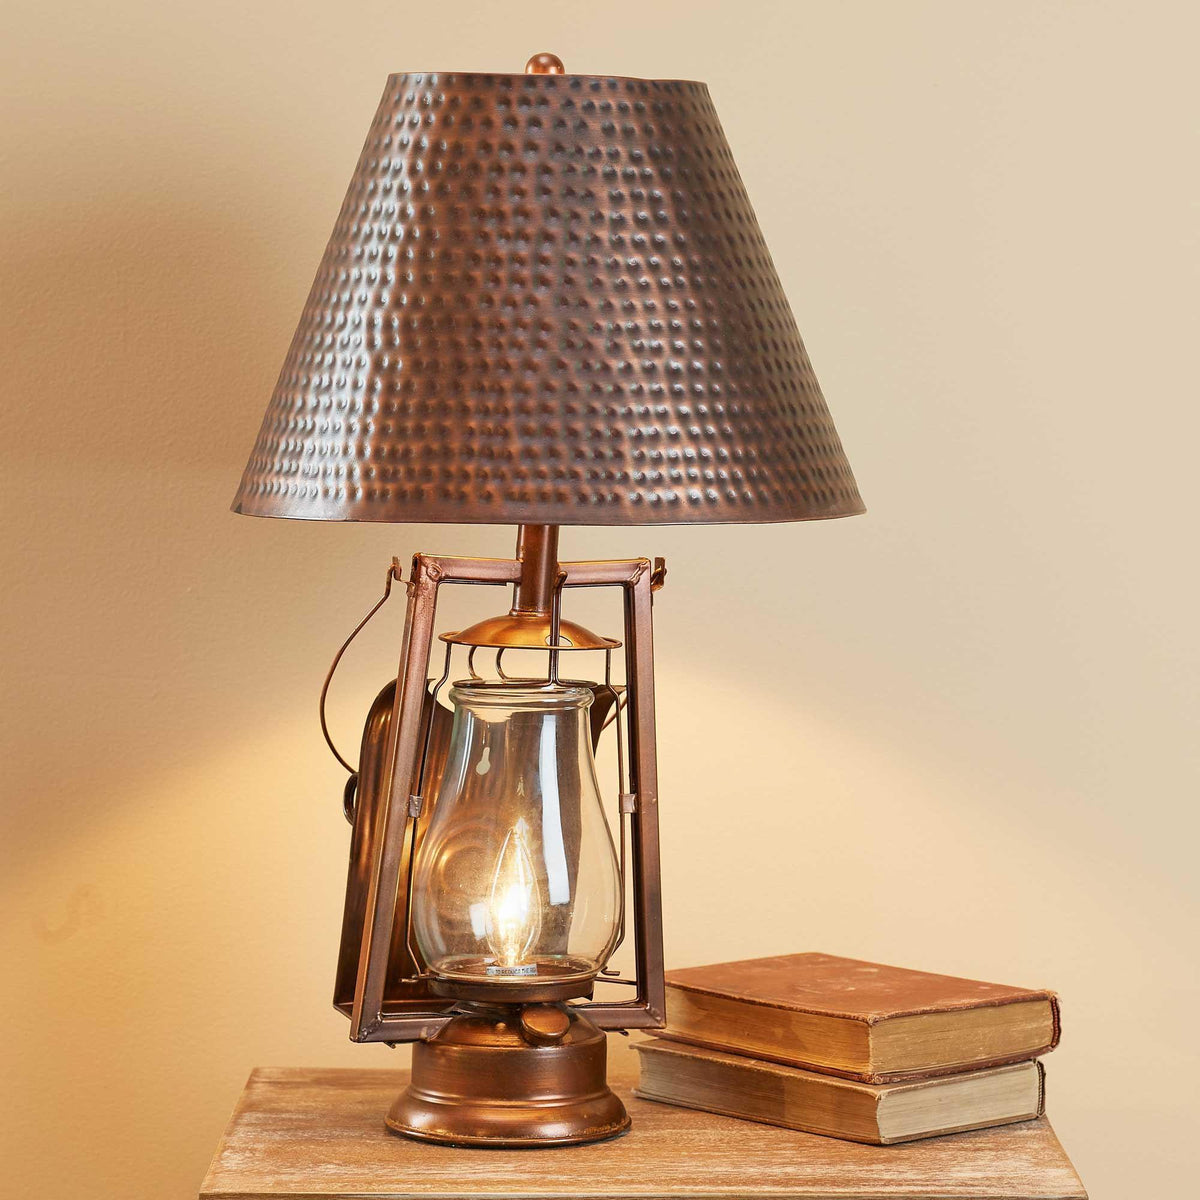 Copper Lantern Table Lamp - Wild Wings